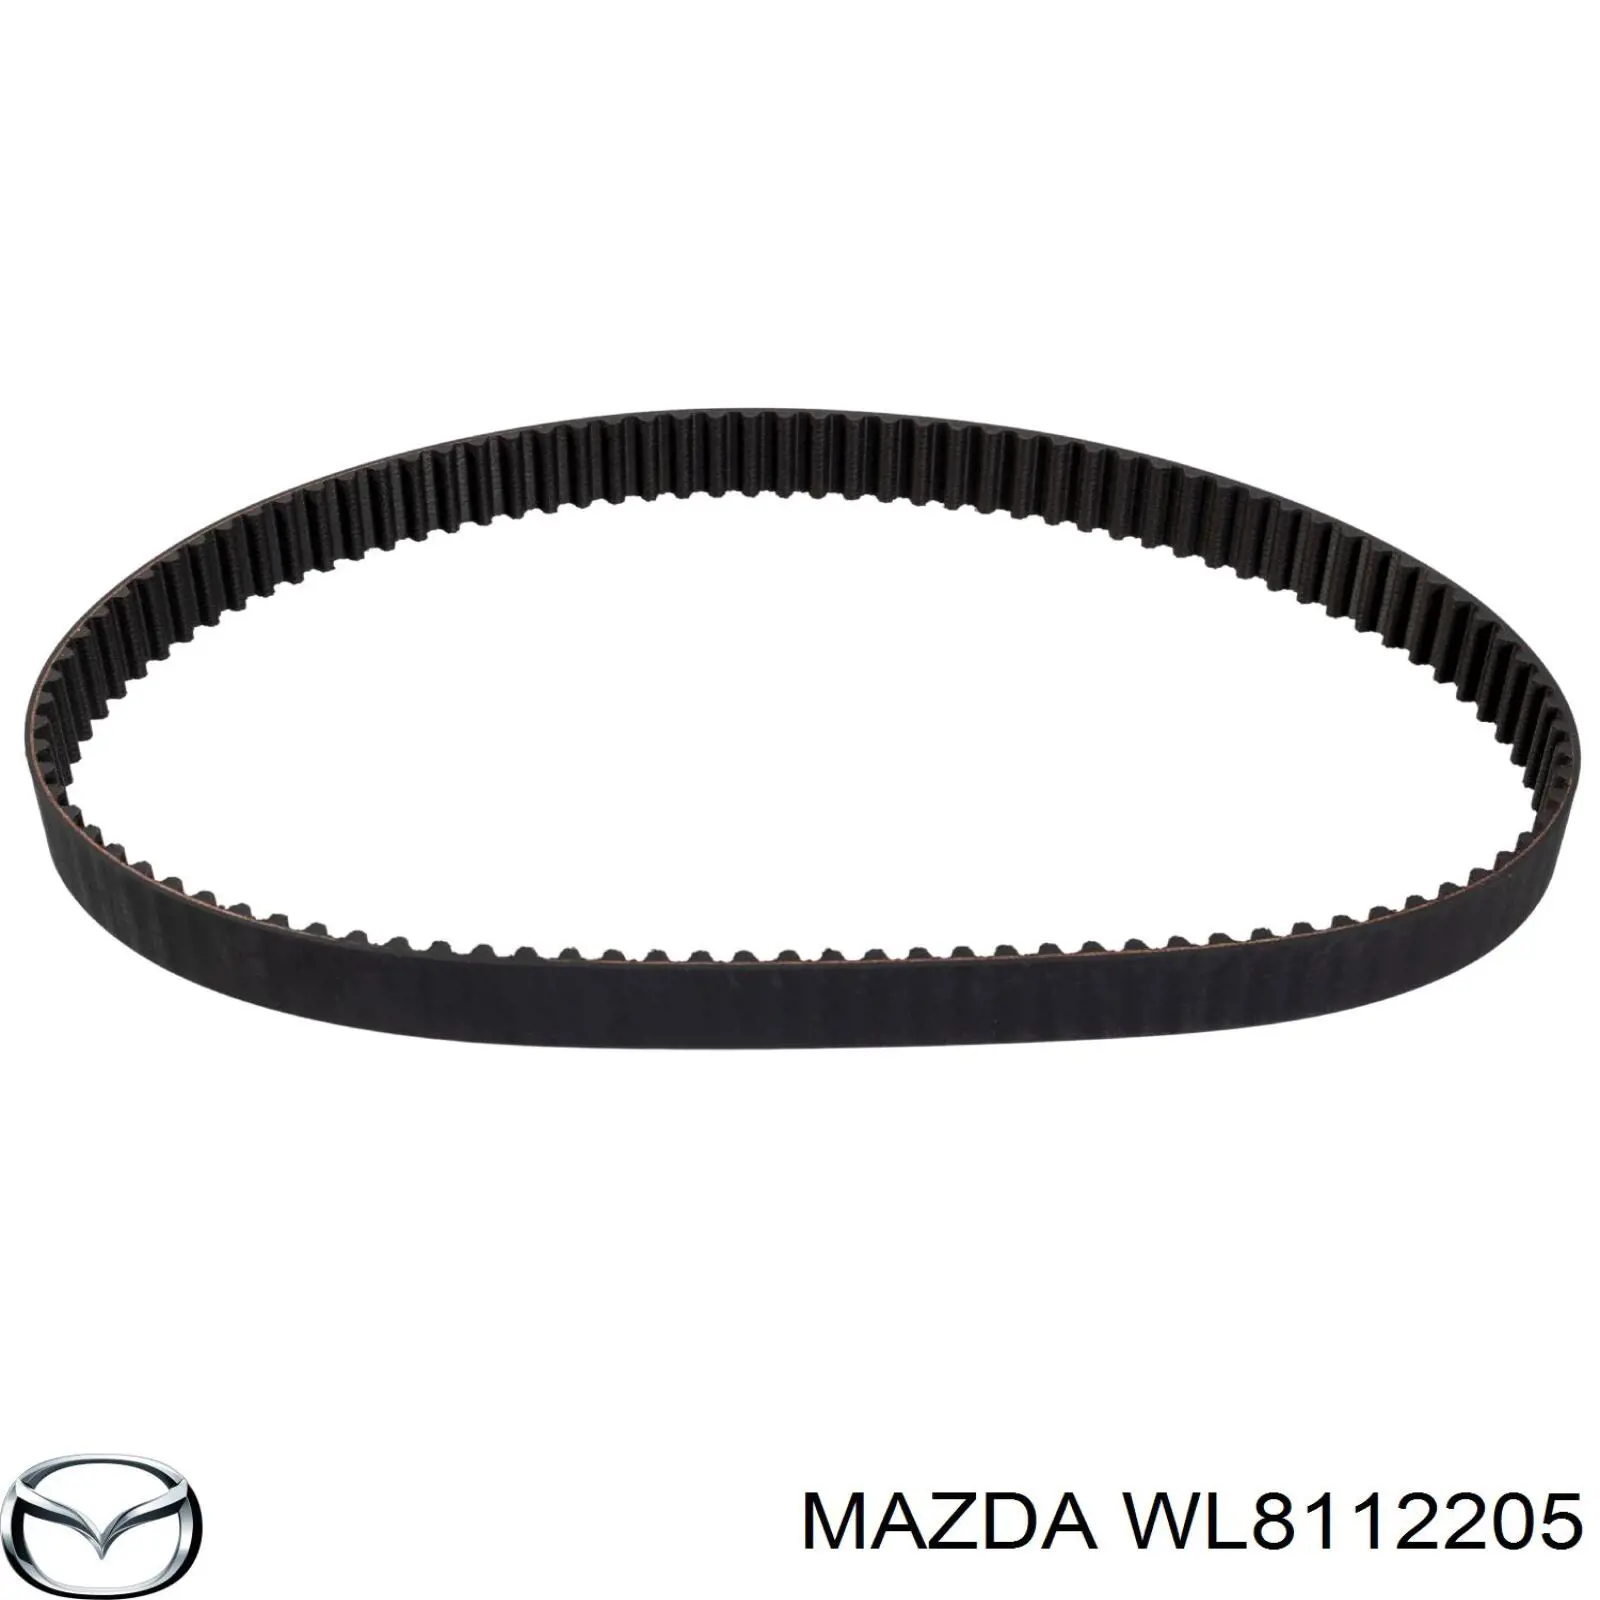 WL8112205 Mazda correa distribucion